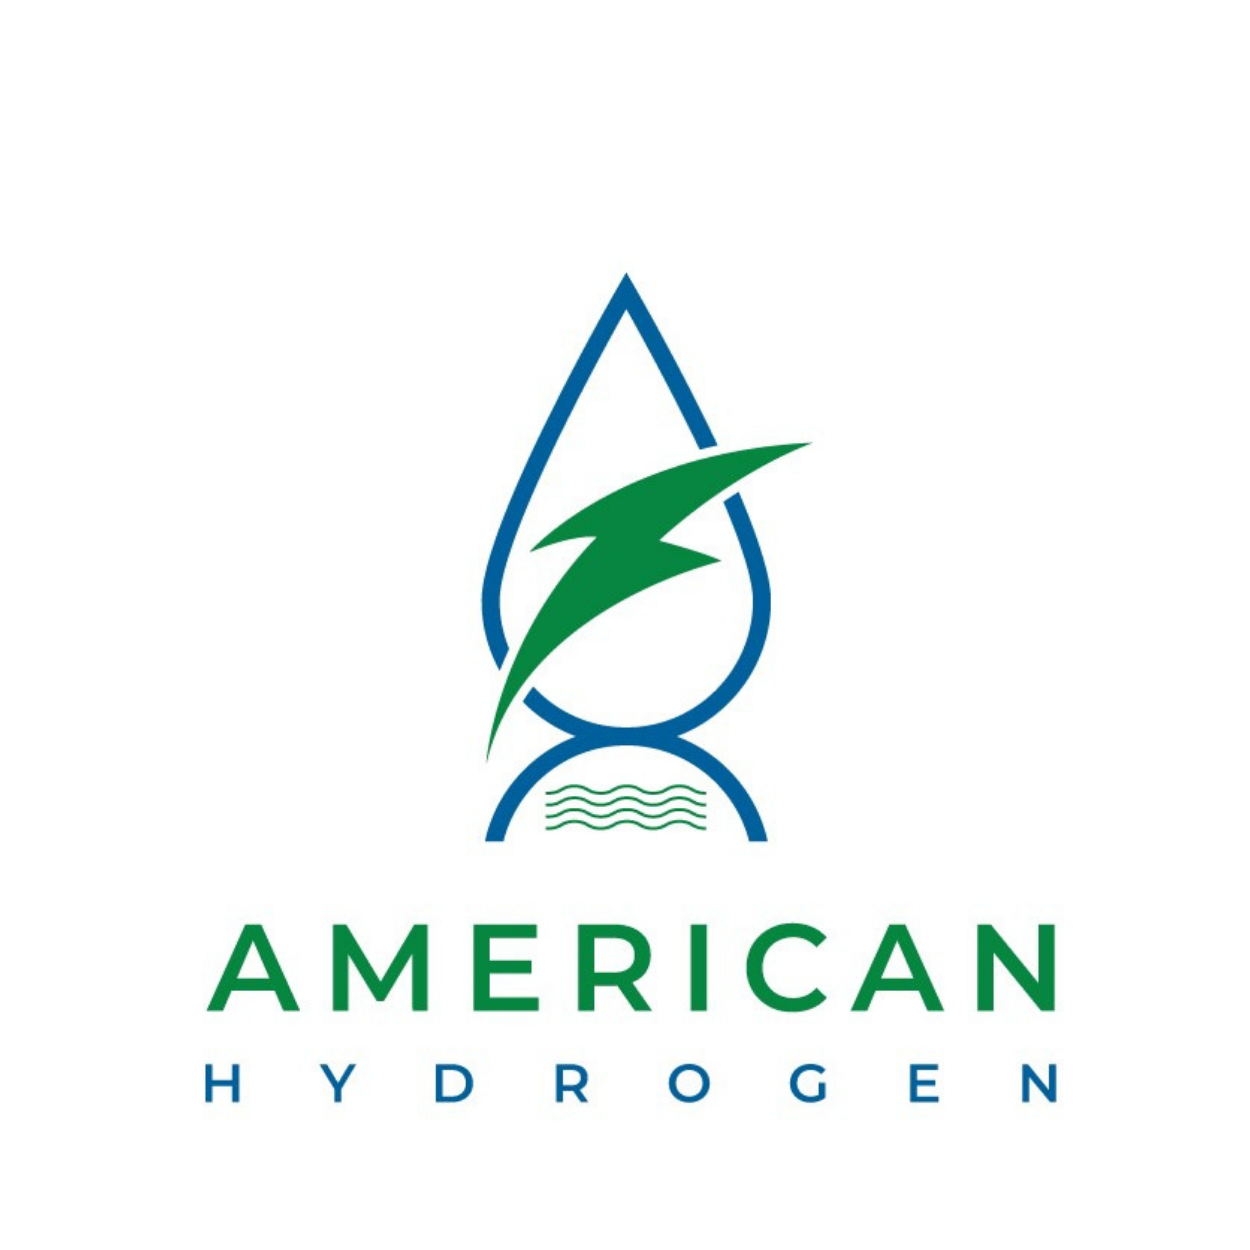 American Hydrogen